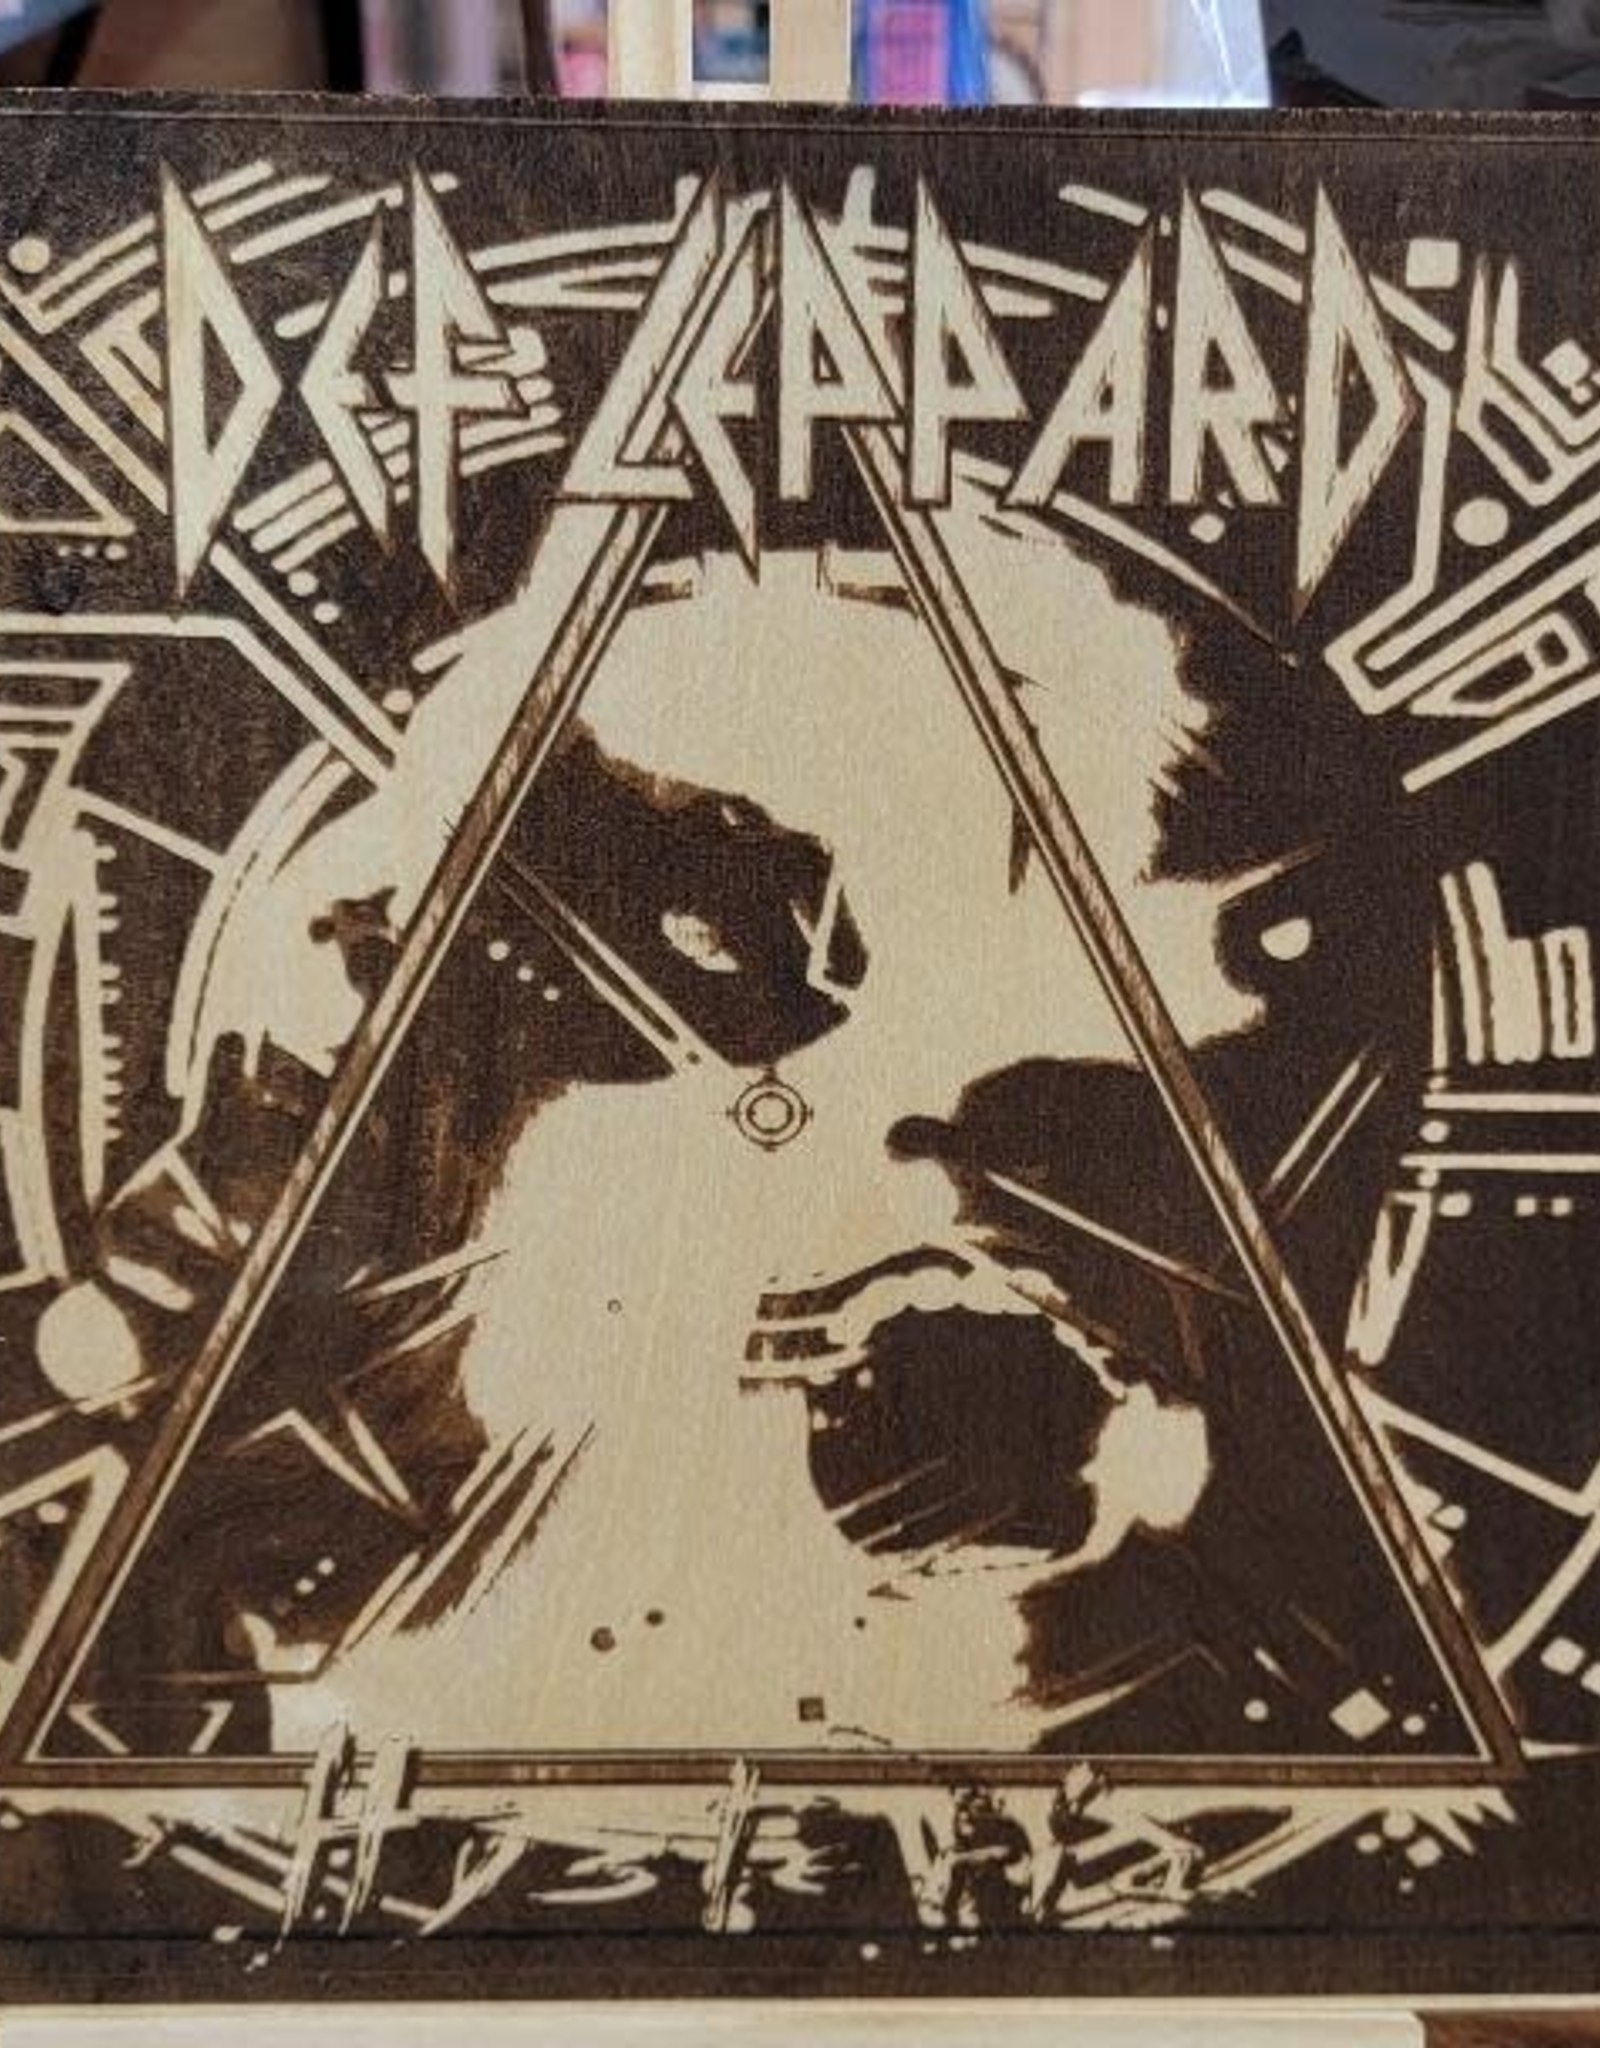 Laser Engraved Record Album Cover Art